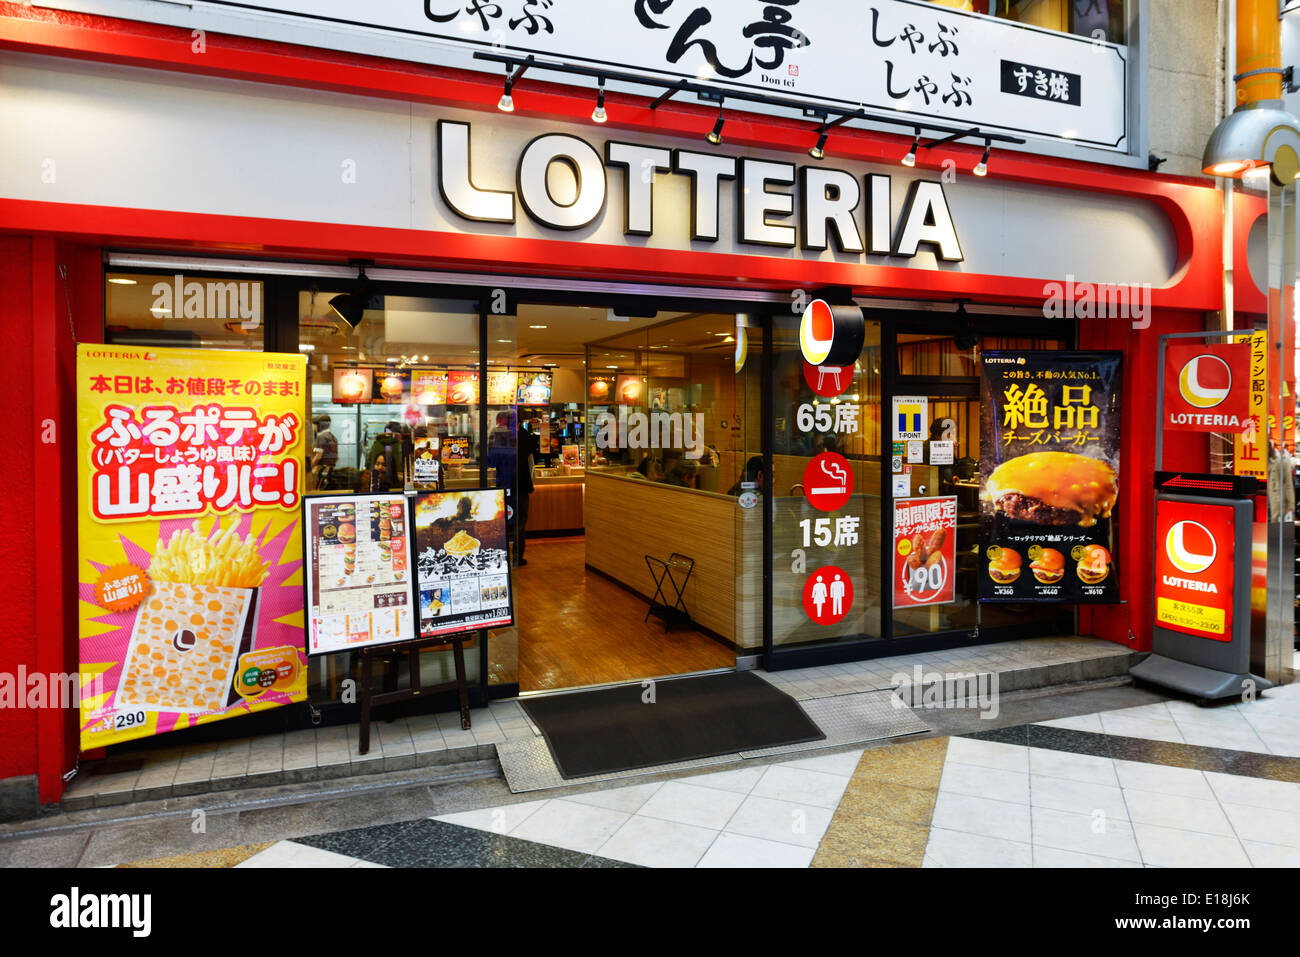 Lotteria fast-food chain restaurant at Sun Mall, Nakano, Tokyo, Japan Stock Photo